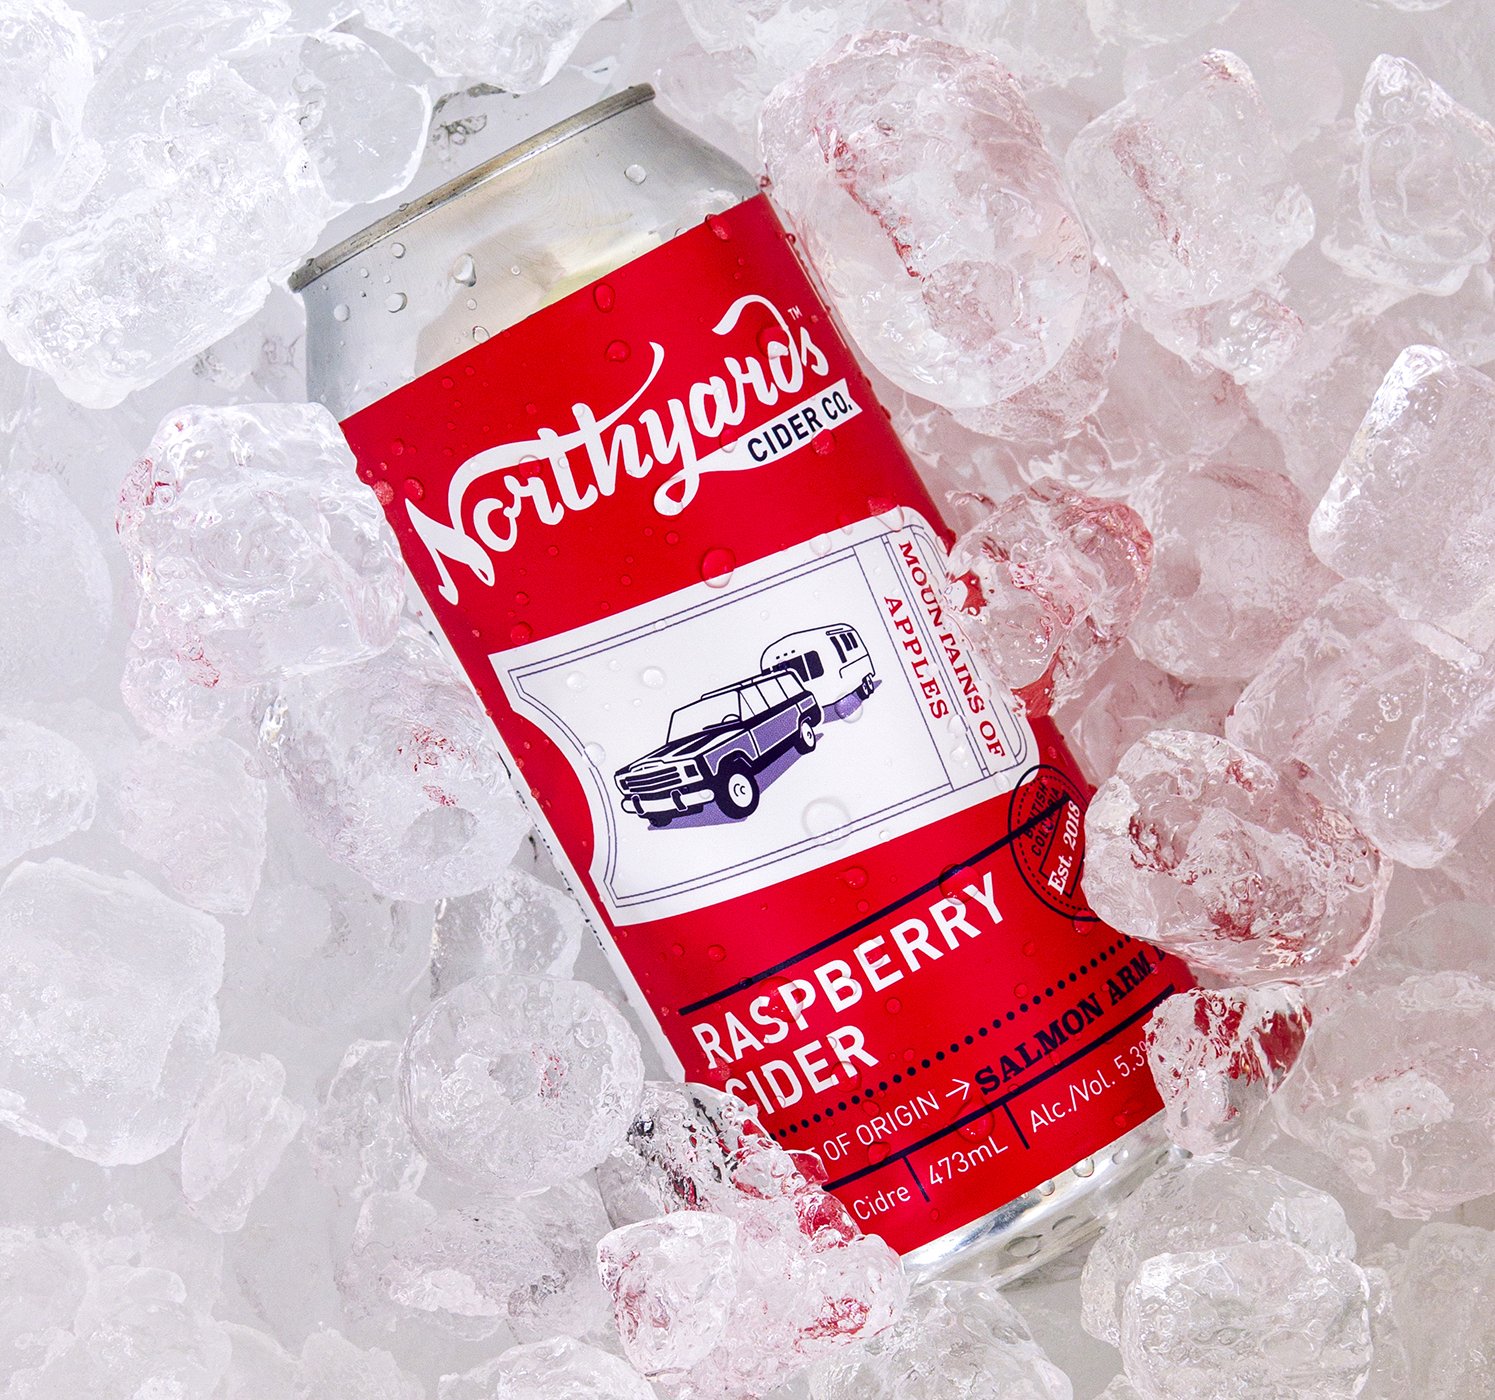 Raspberry cider label design.jpg